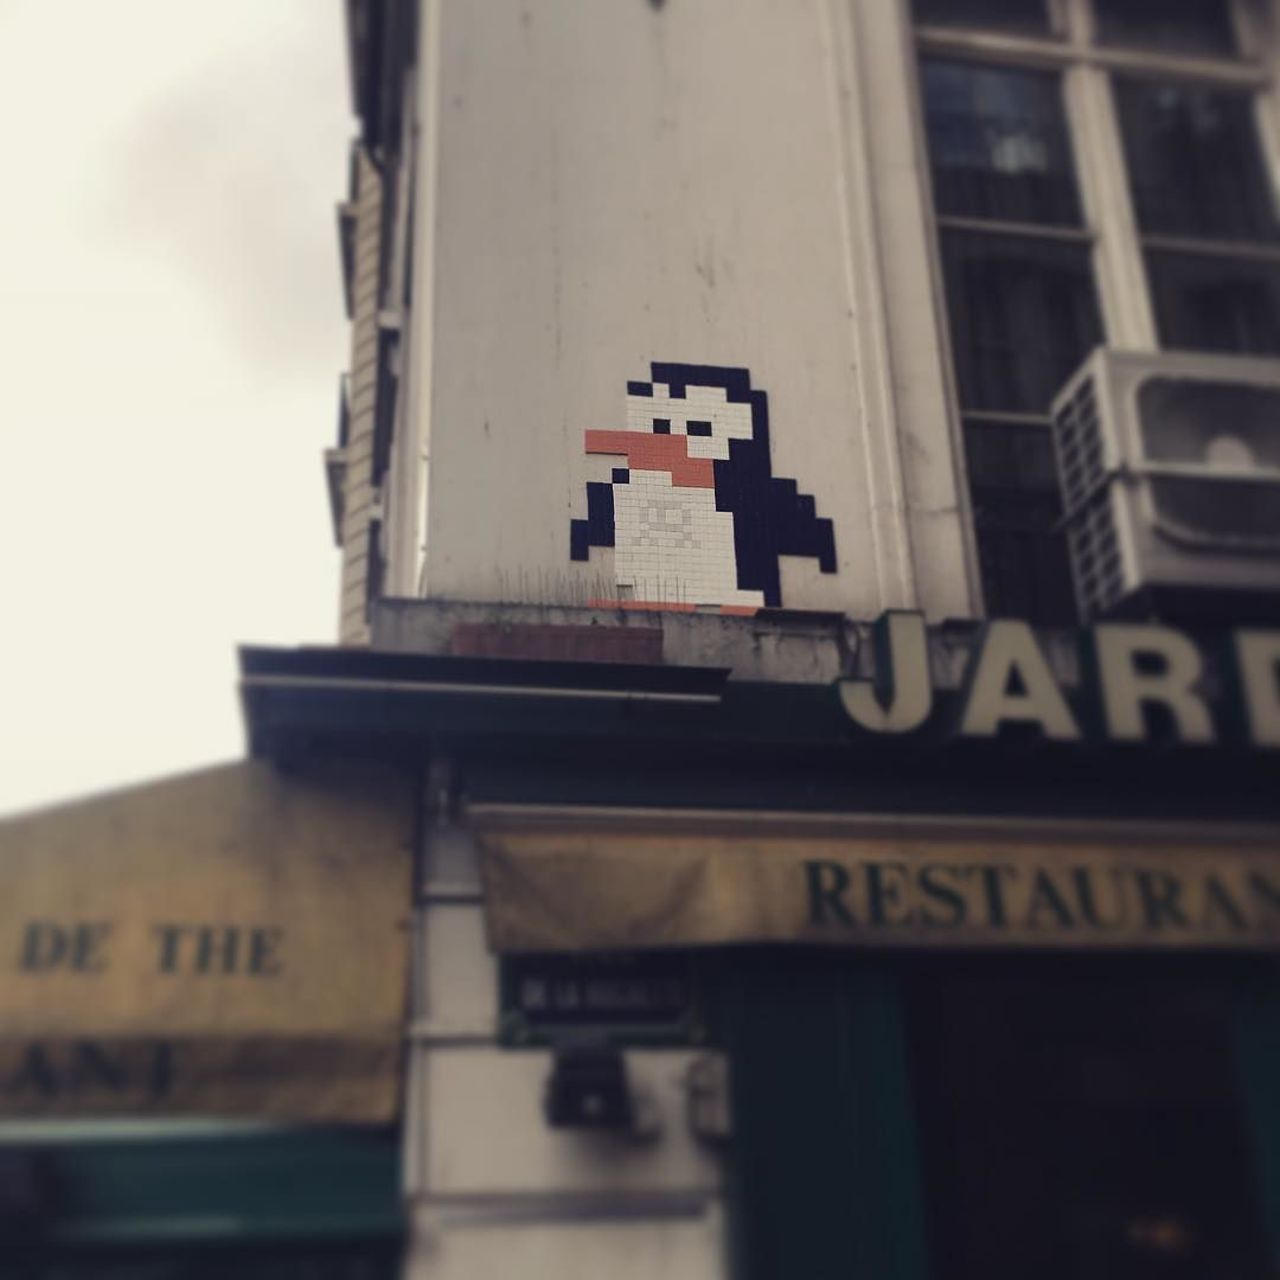 #Paris #graffiti photo by @luketheheathen http://ift.tt/1N1Mh5F #StreetArt https://t.co/8lkP4ISpKF